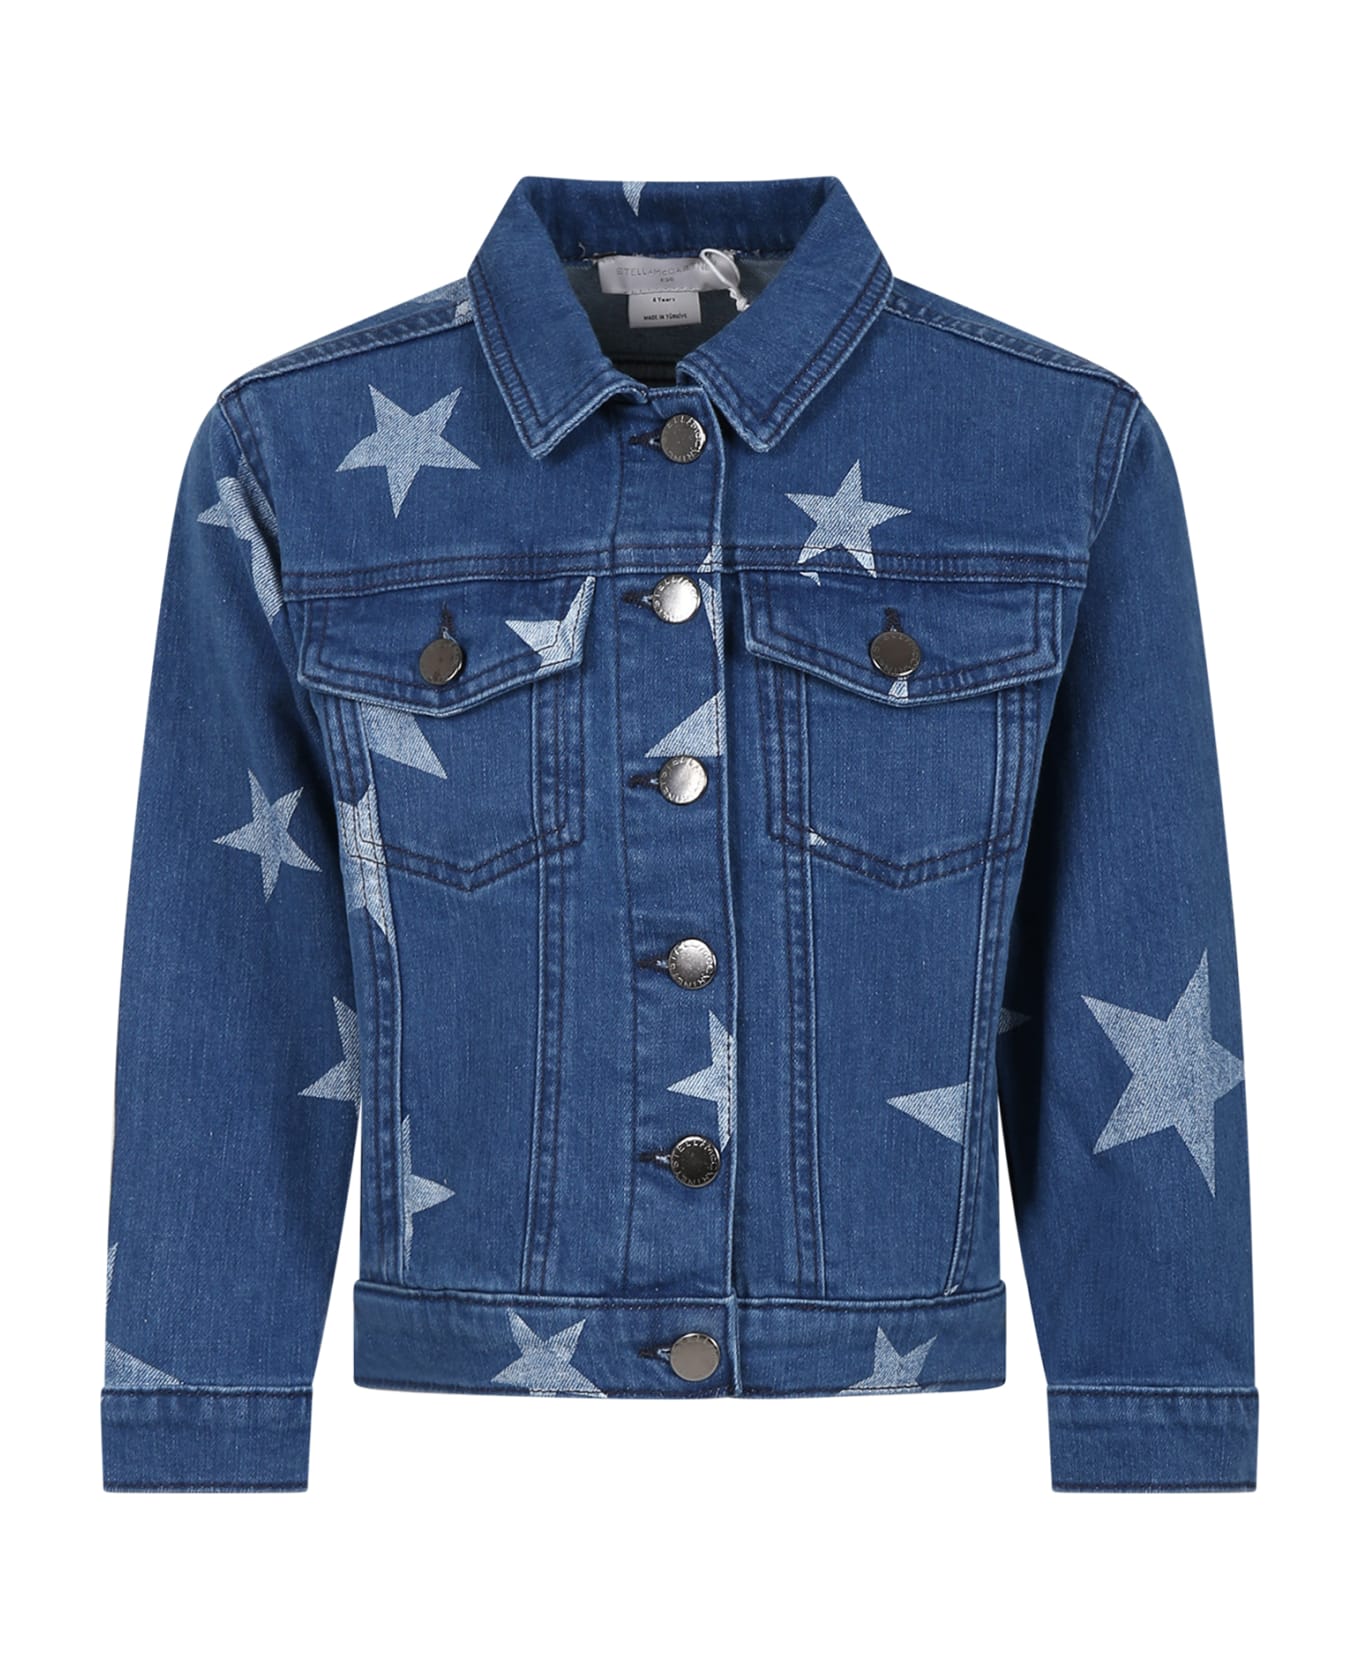 Stella McCartney Kids Blue Jacket For Girl With Stars - Denim